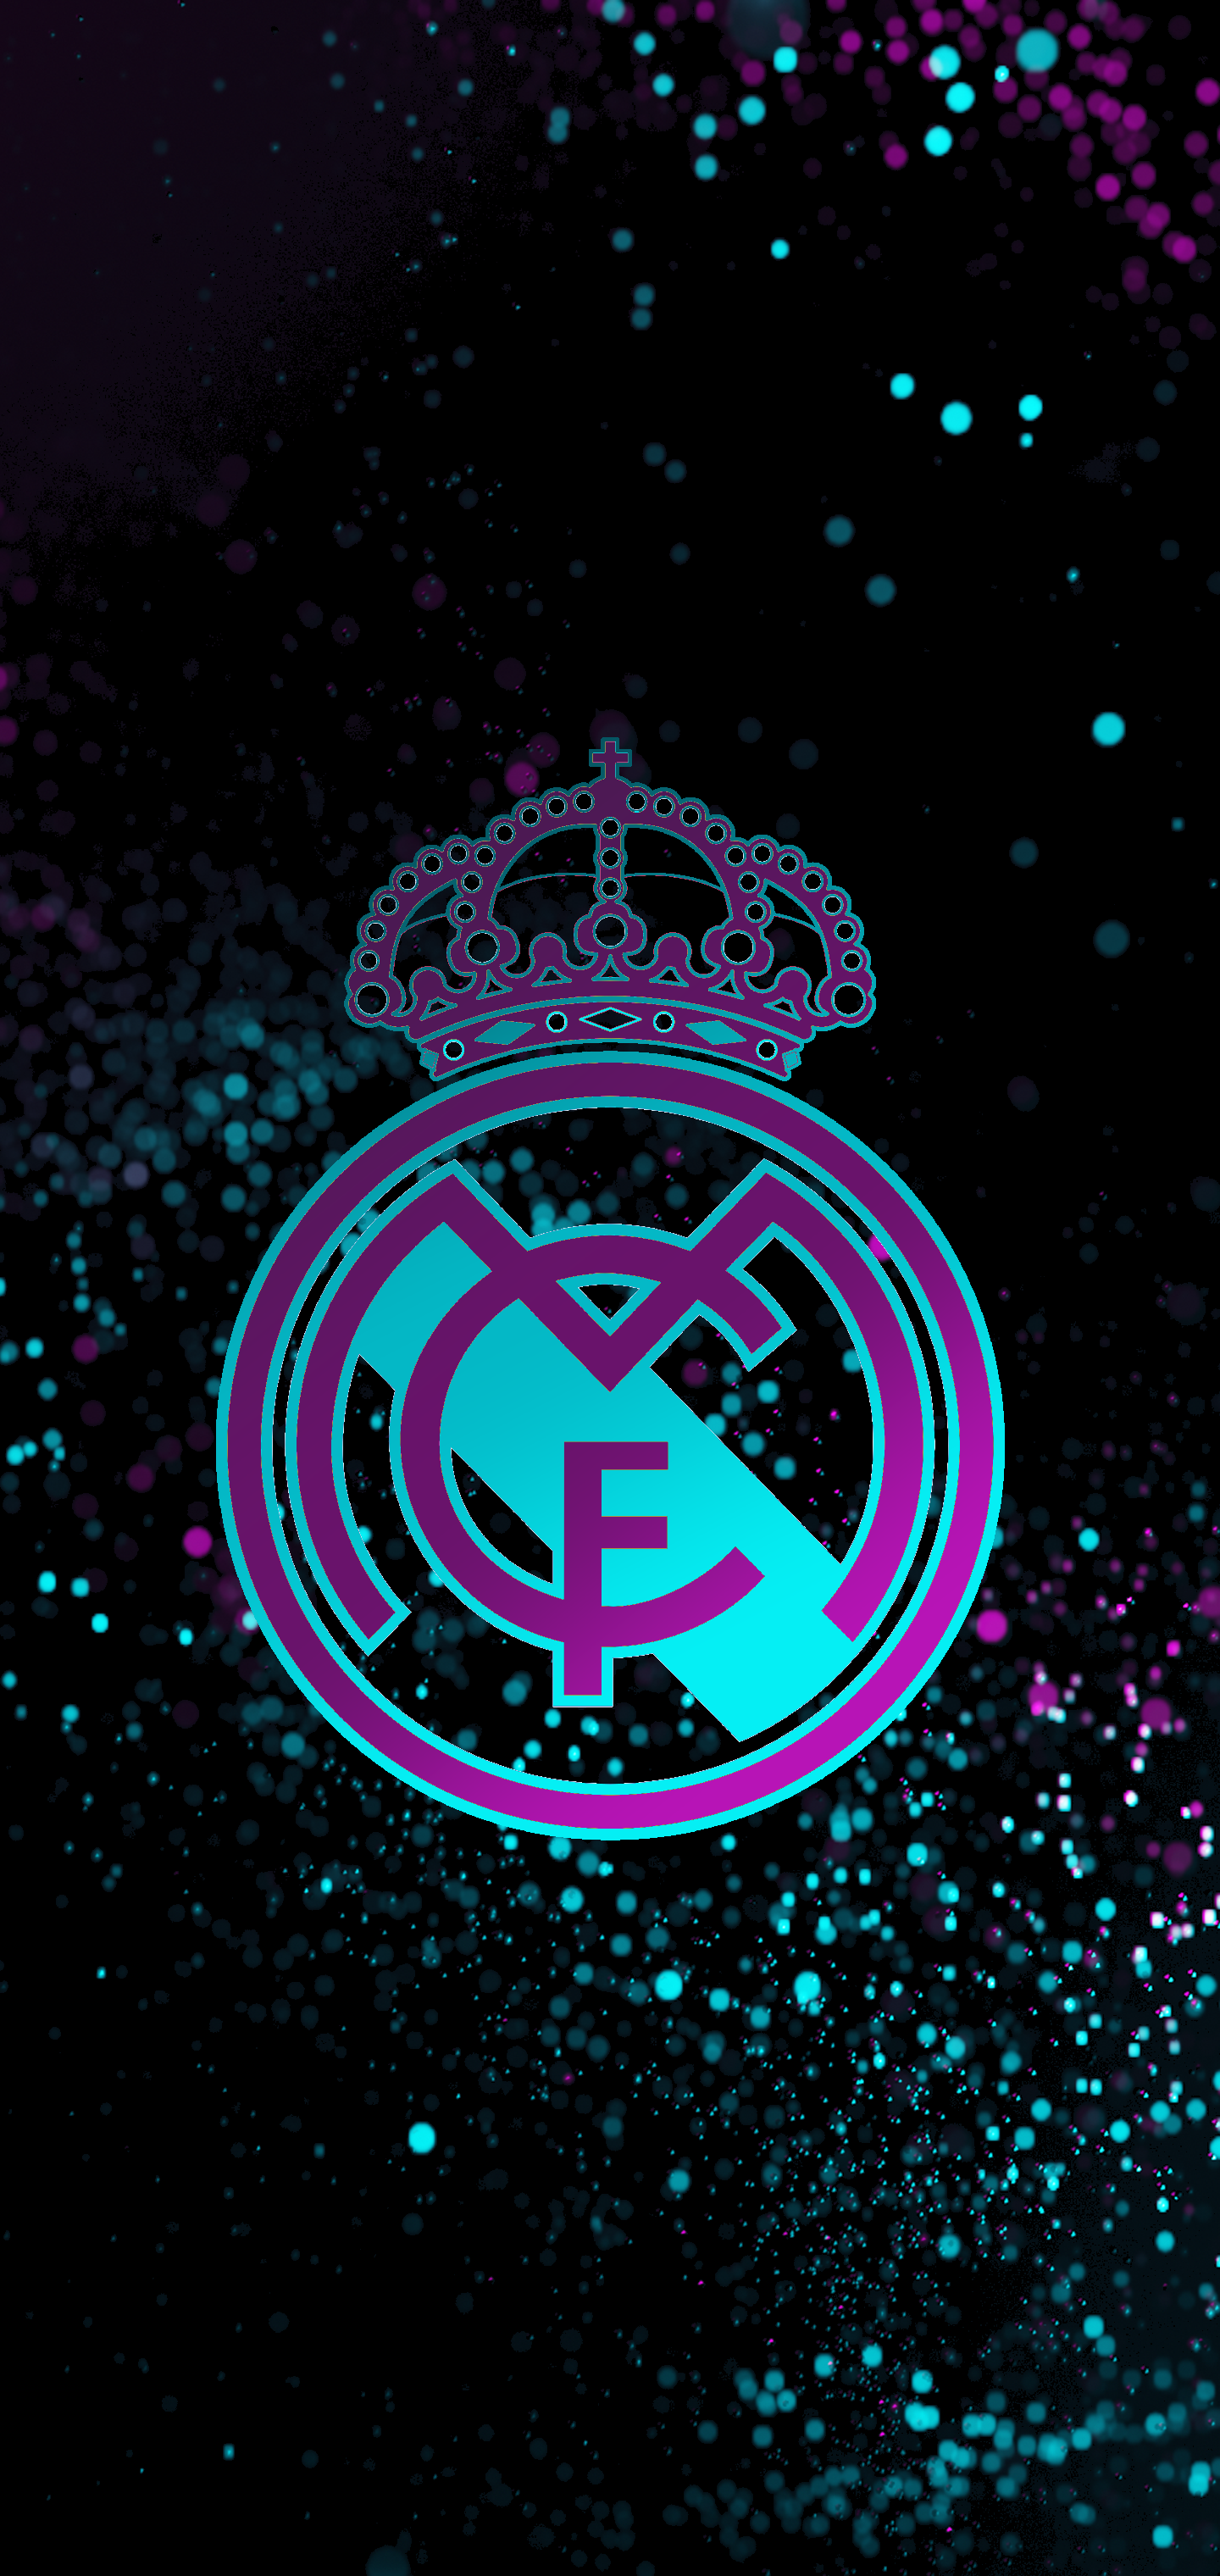 Real Madrid  Madrid wallpaper, Real madrid wallpapers, Real madrid logo